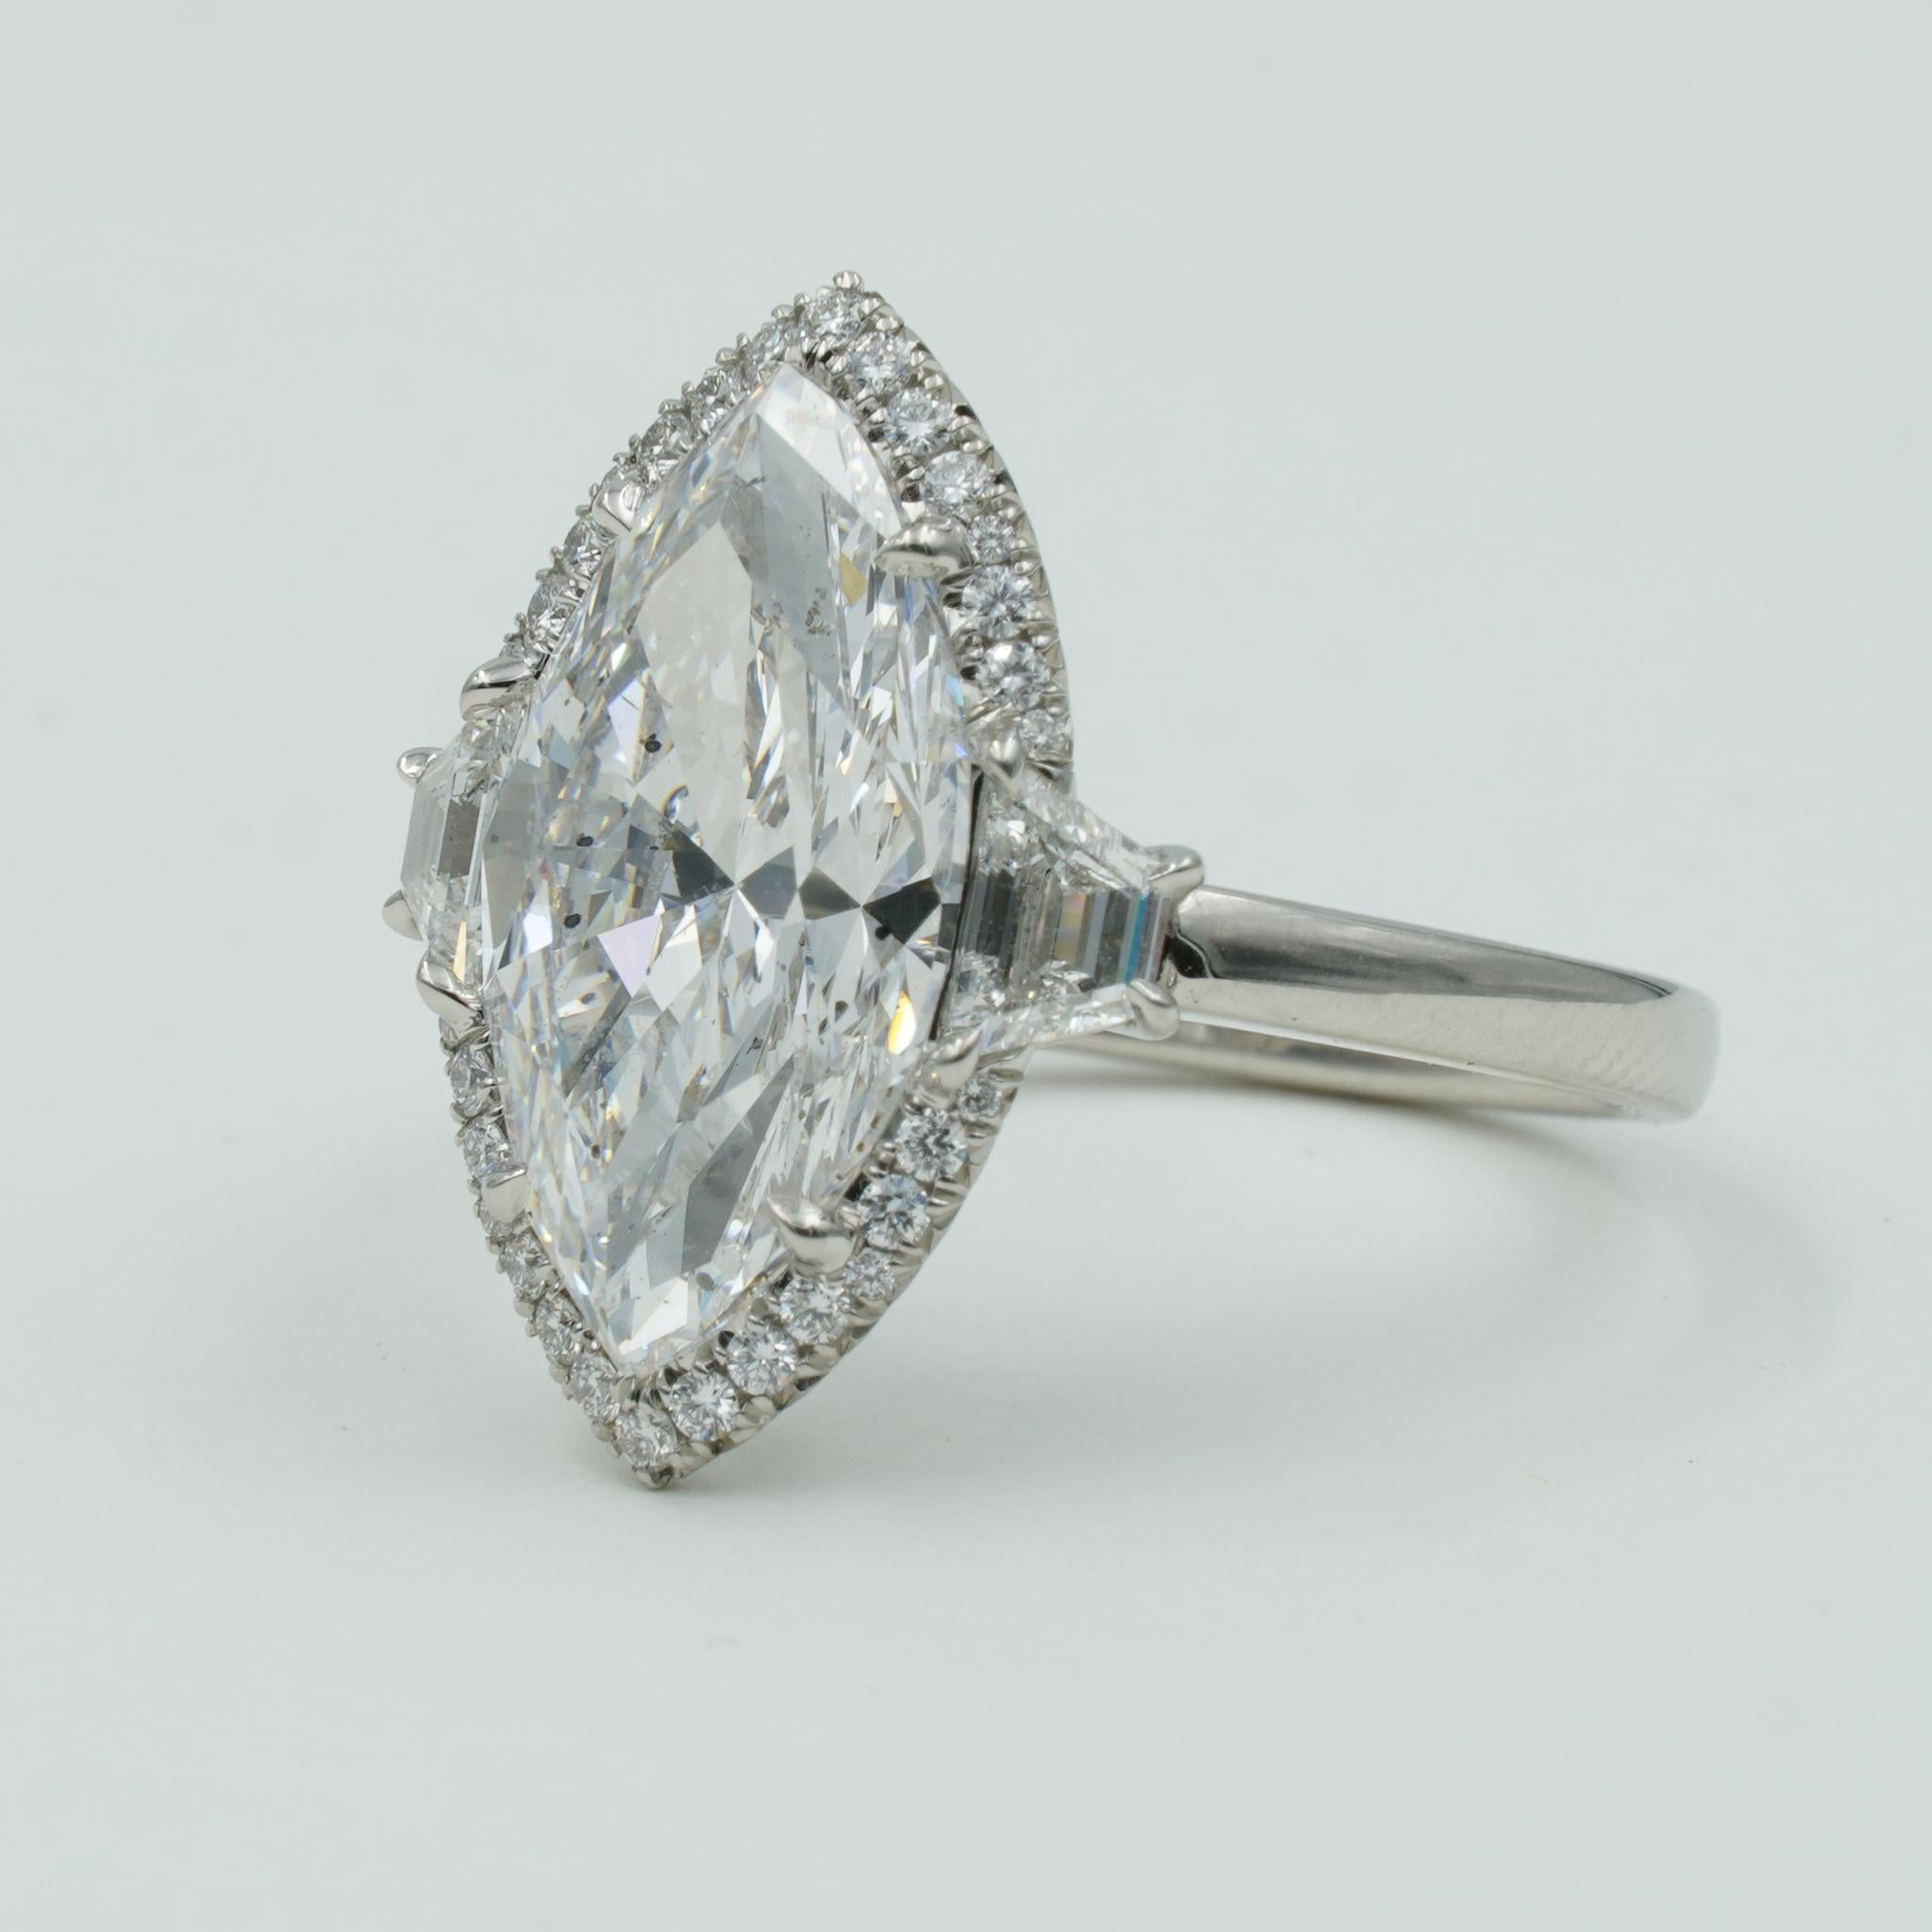 5 carat marquise diamond ring